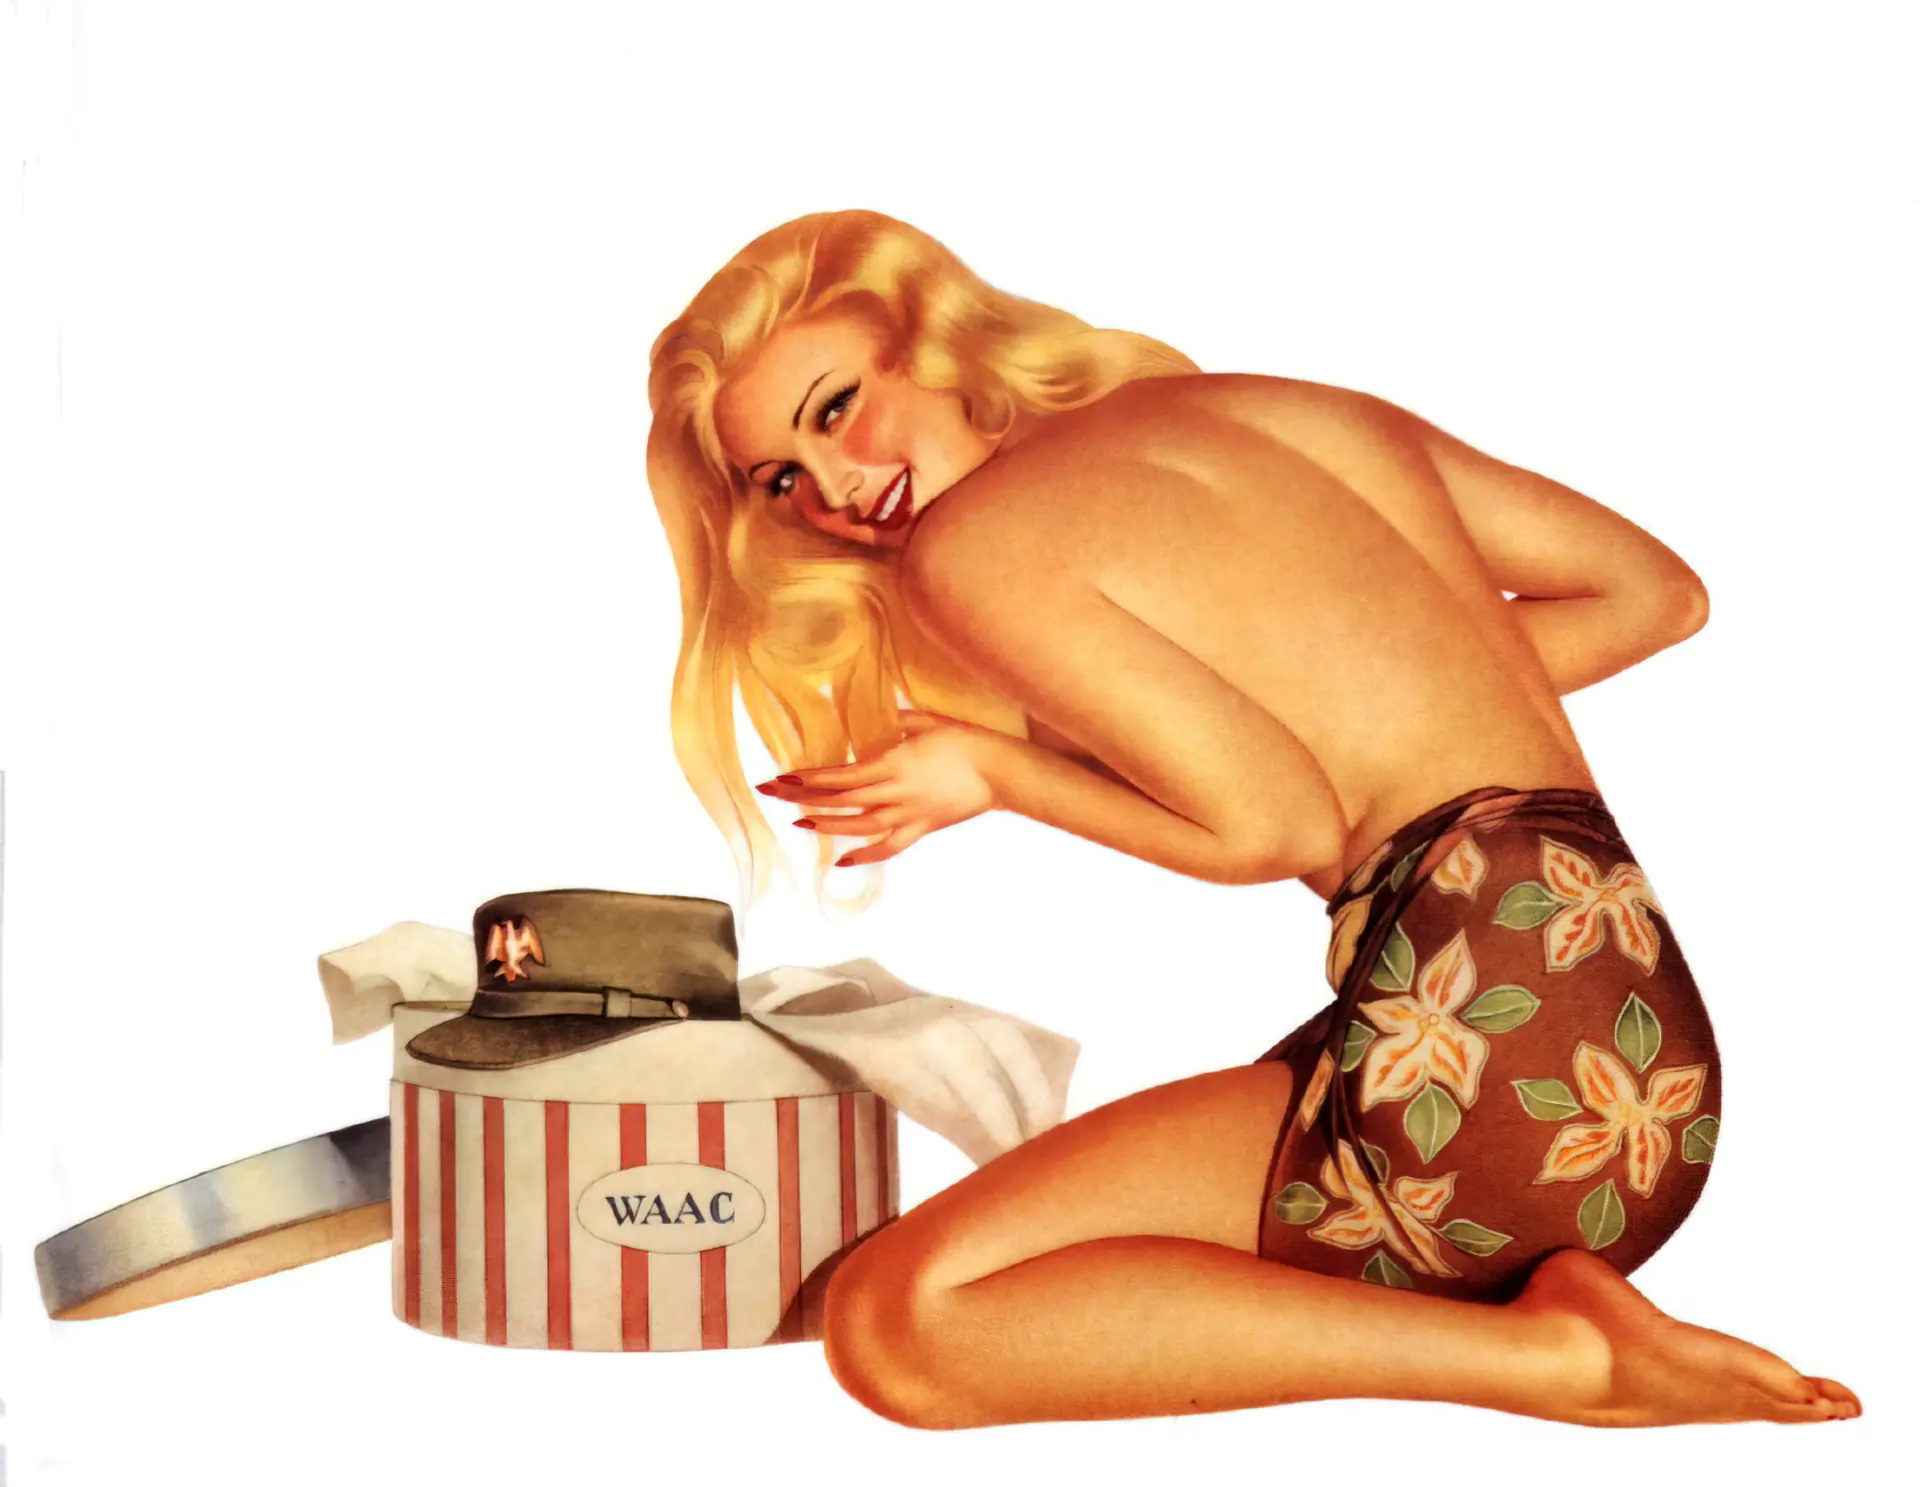 Vintage Cartoon Porn Pics: Free Classic Nudes — Vintage Cuties